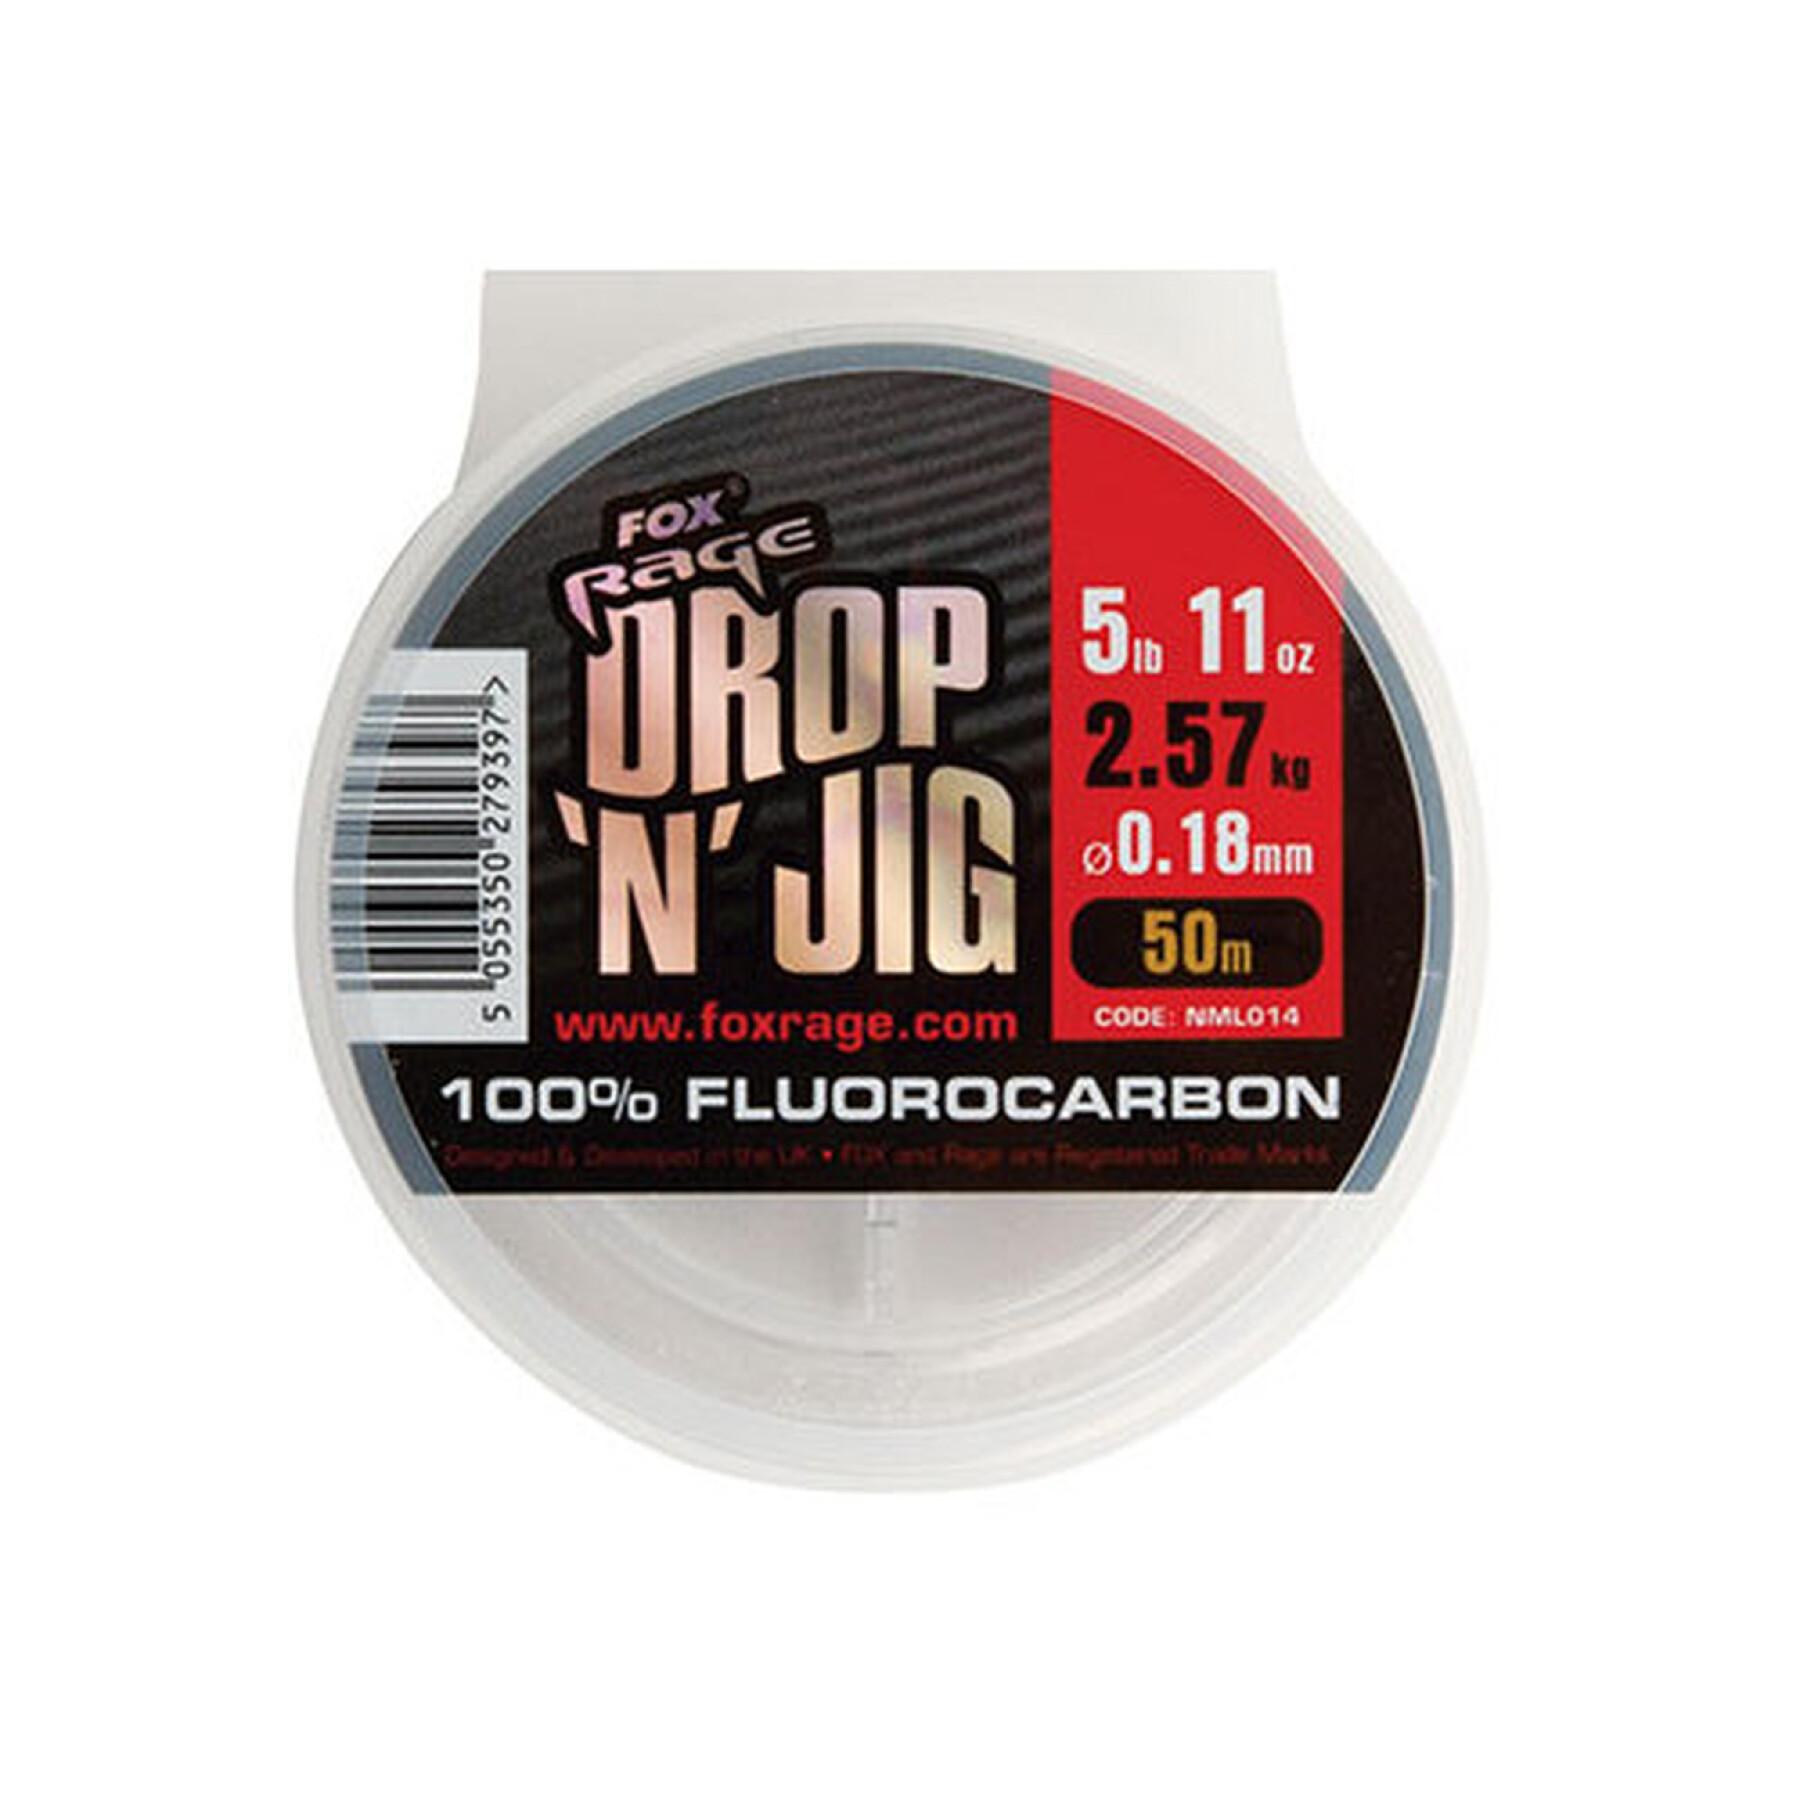 Fluorocarbon Fox Rage drop & jig 2.57kg / 5.67lb x 50m